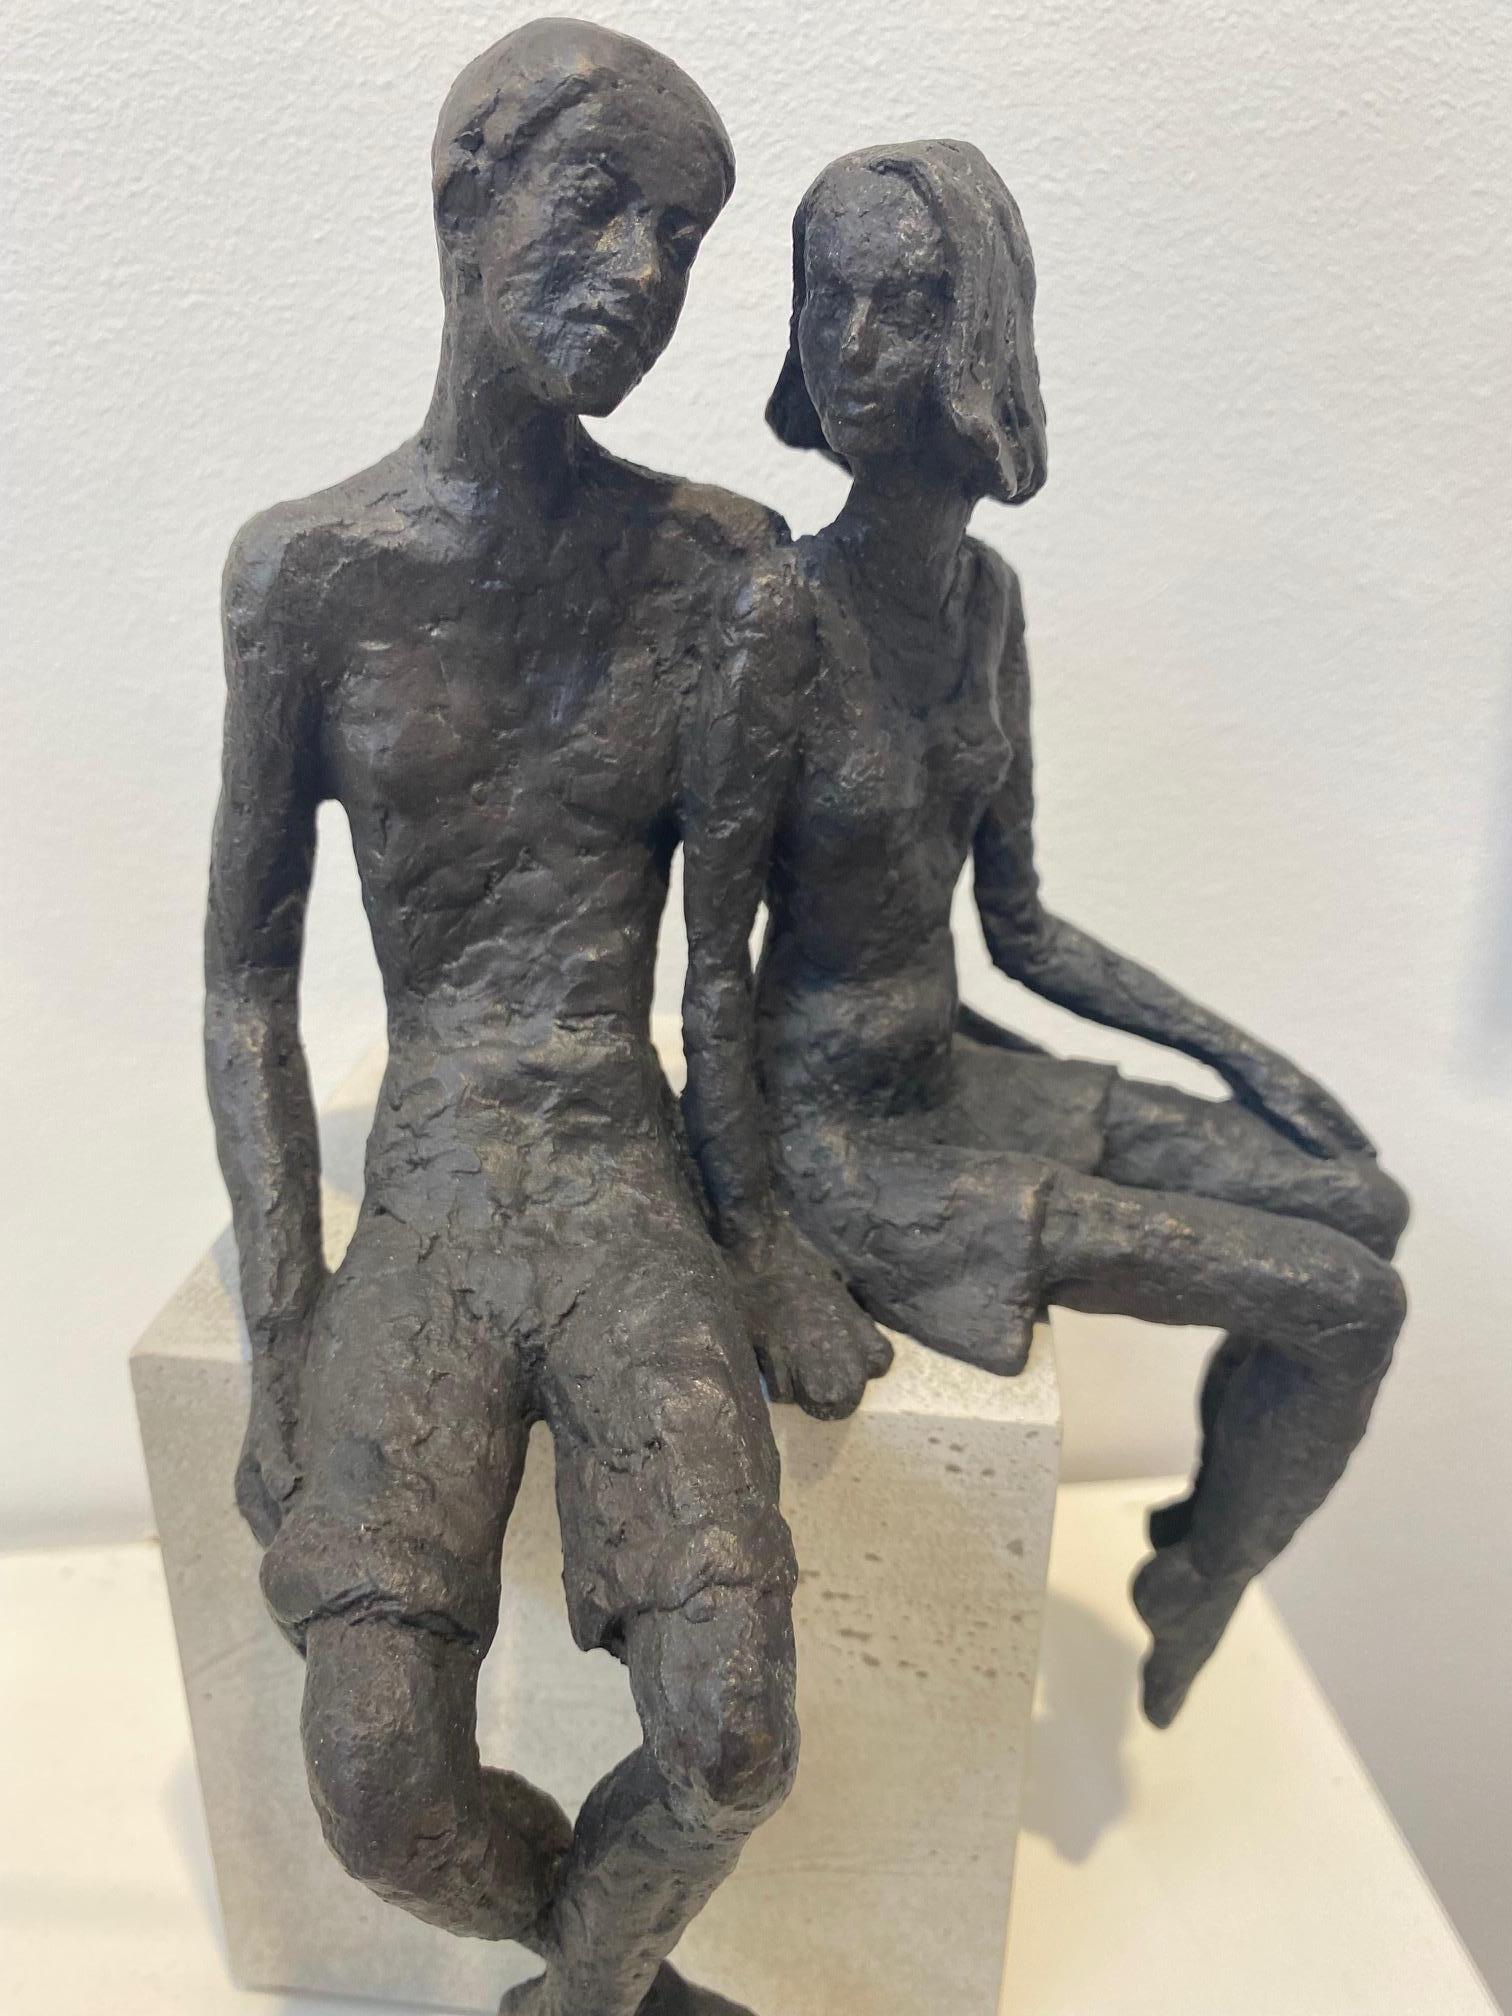 Pair  - contemporary bronze sculpture of a seated couple on a wooden block - Contemporary Sculpture by Susanne Kraisser